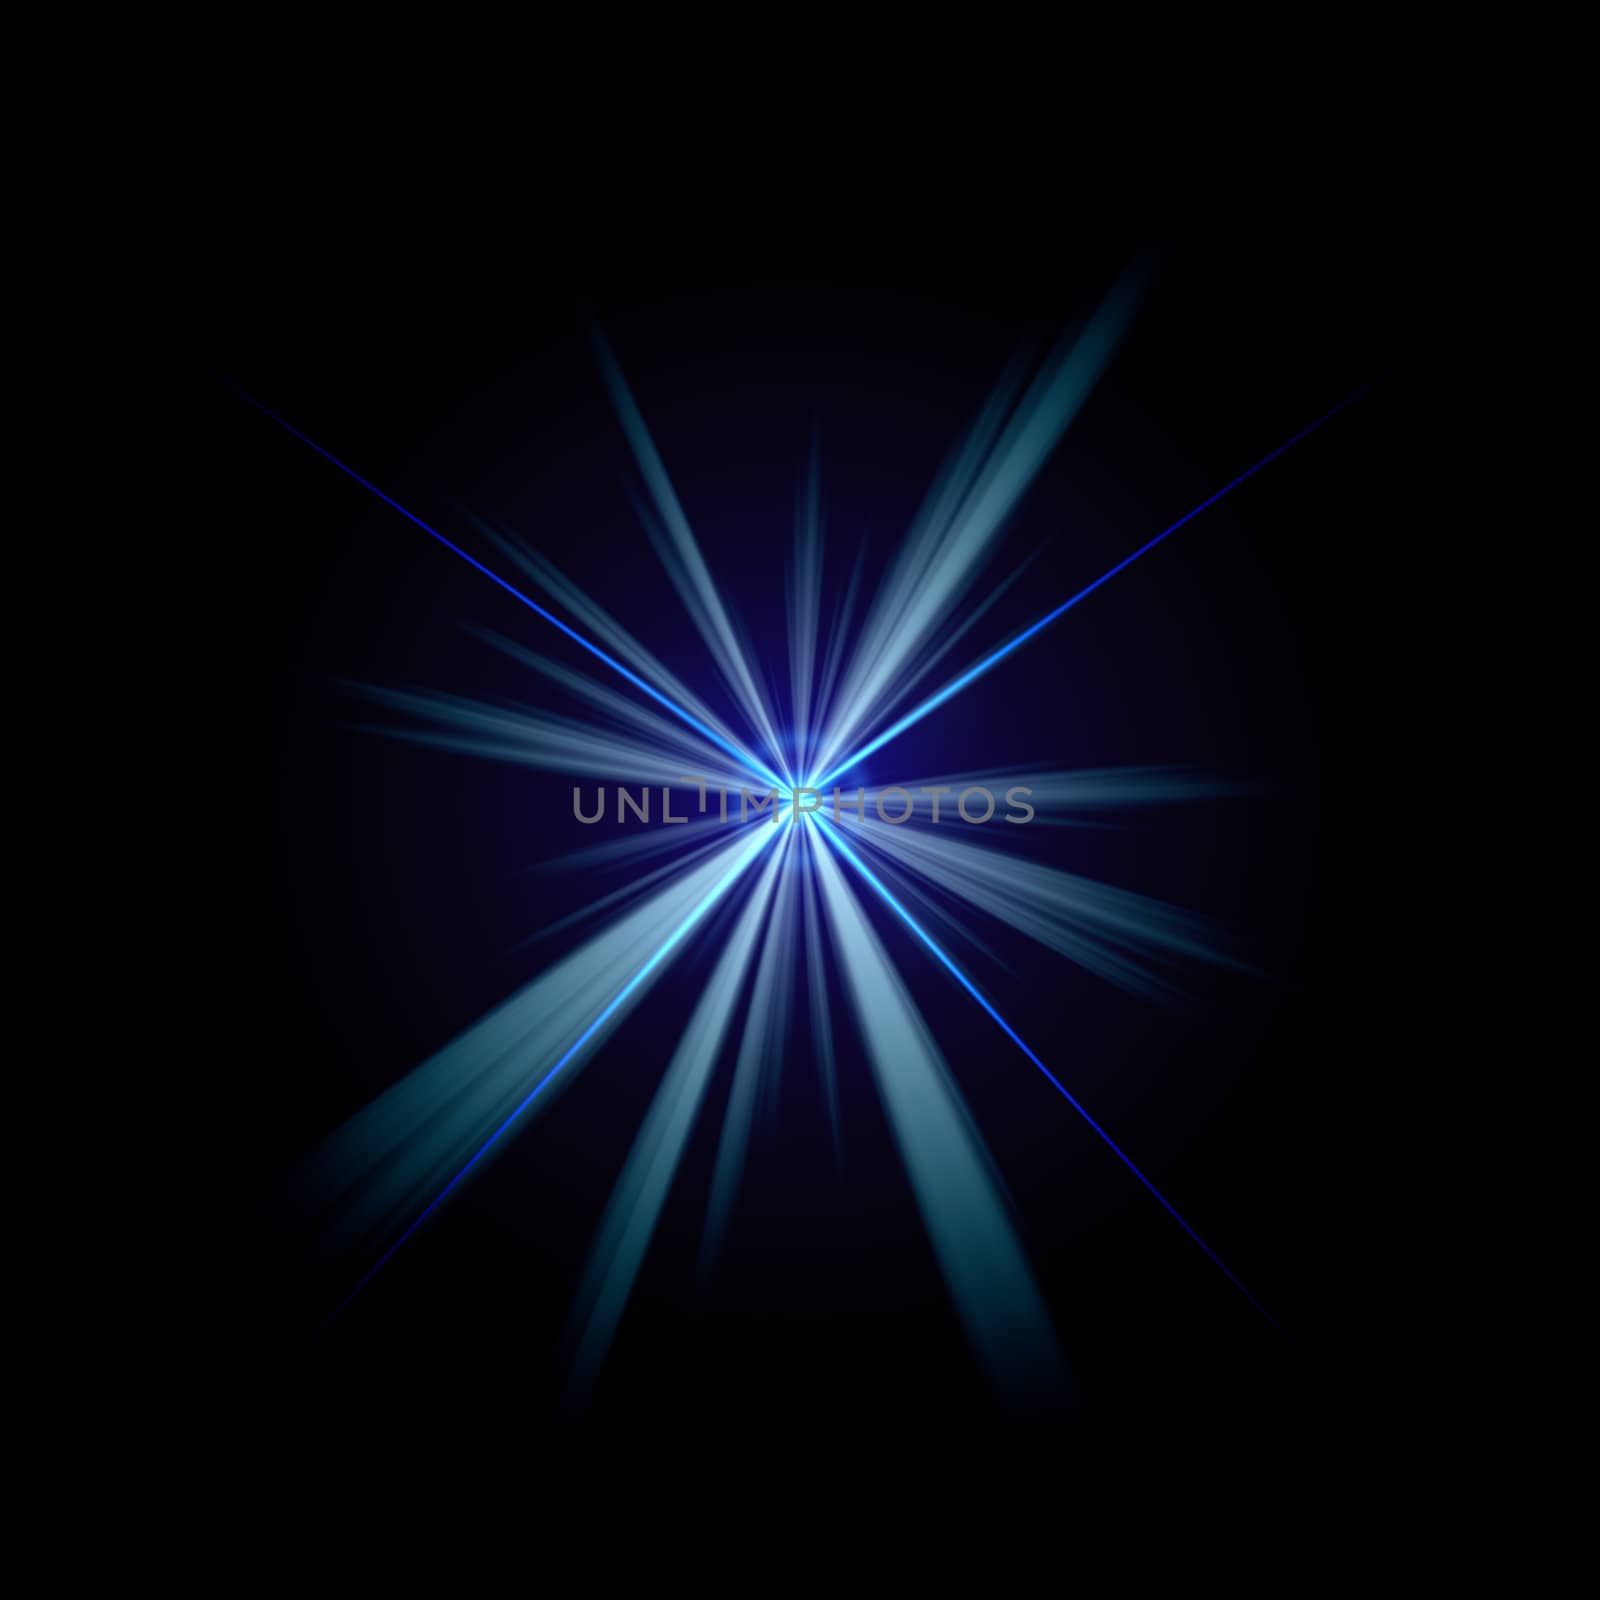 Bright blue flash of light or lens flare burst over a black background.